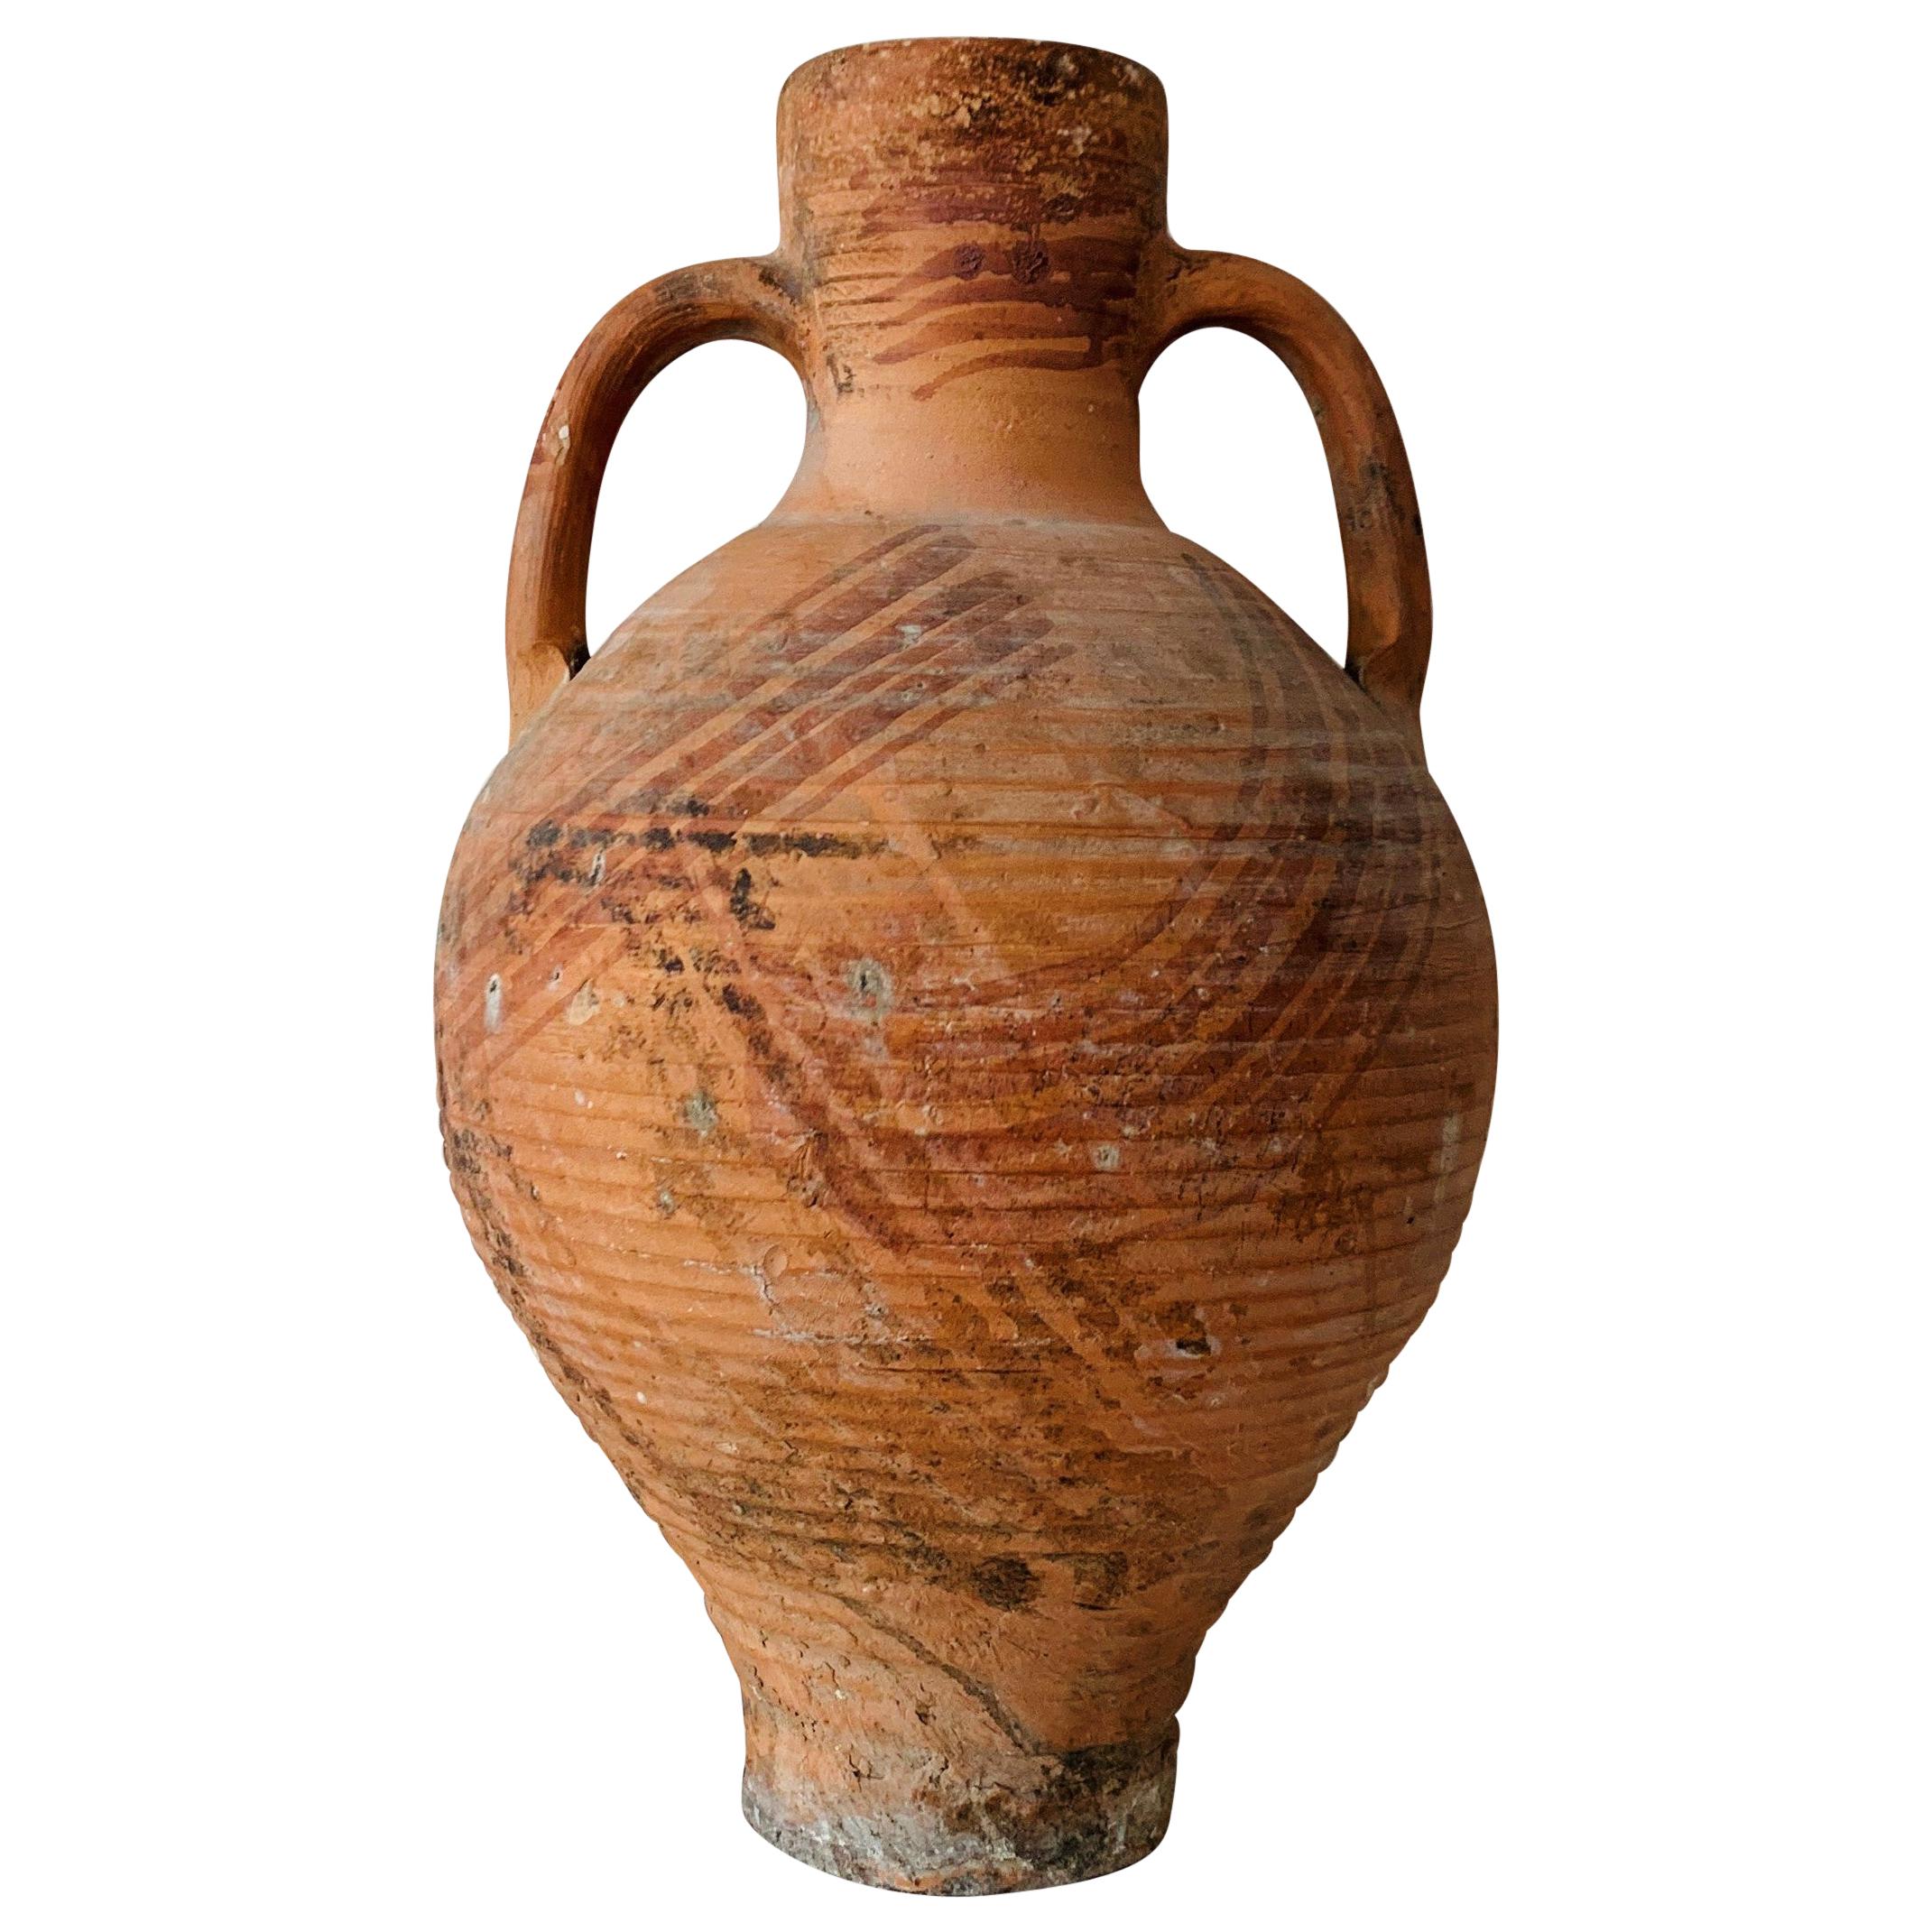 vase en terre cuite Picher "Cantaro" de Calanda:: Espagne:: 19e siècle